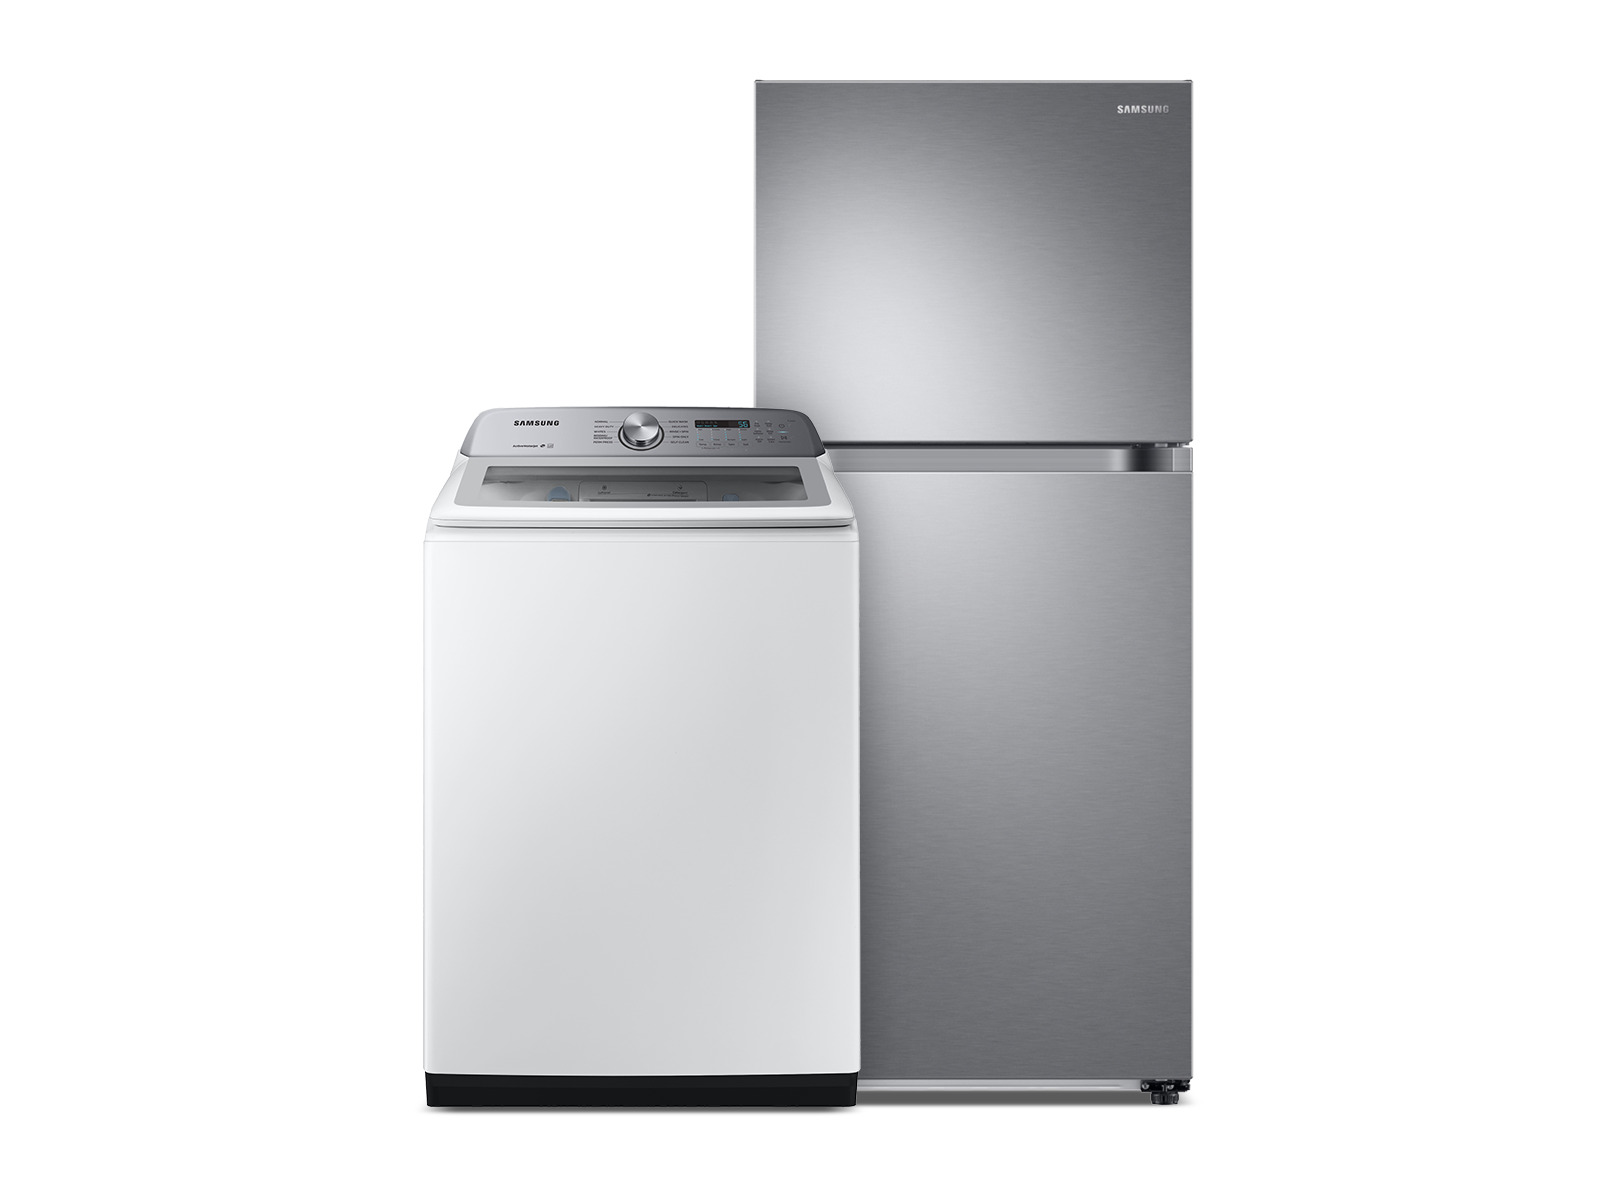 Photos - Fridge Samsung Large Capacity Top Load Washer with Active WaterJet & Top Freezer 